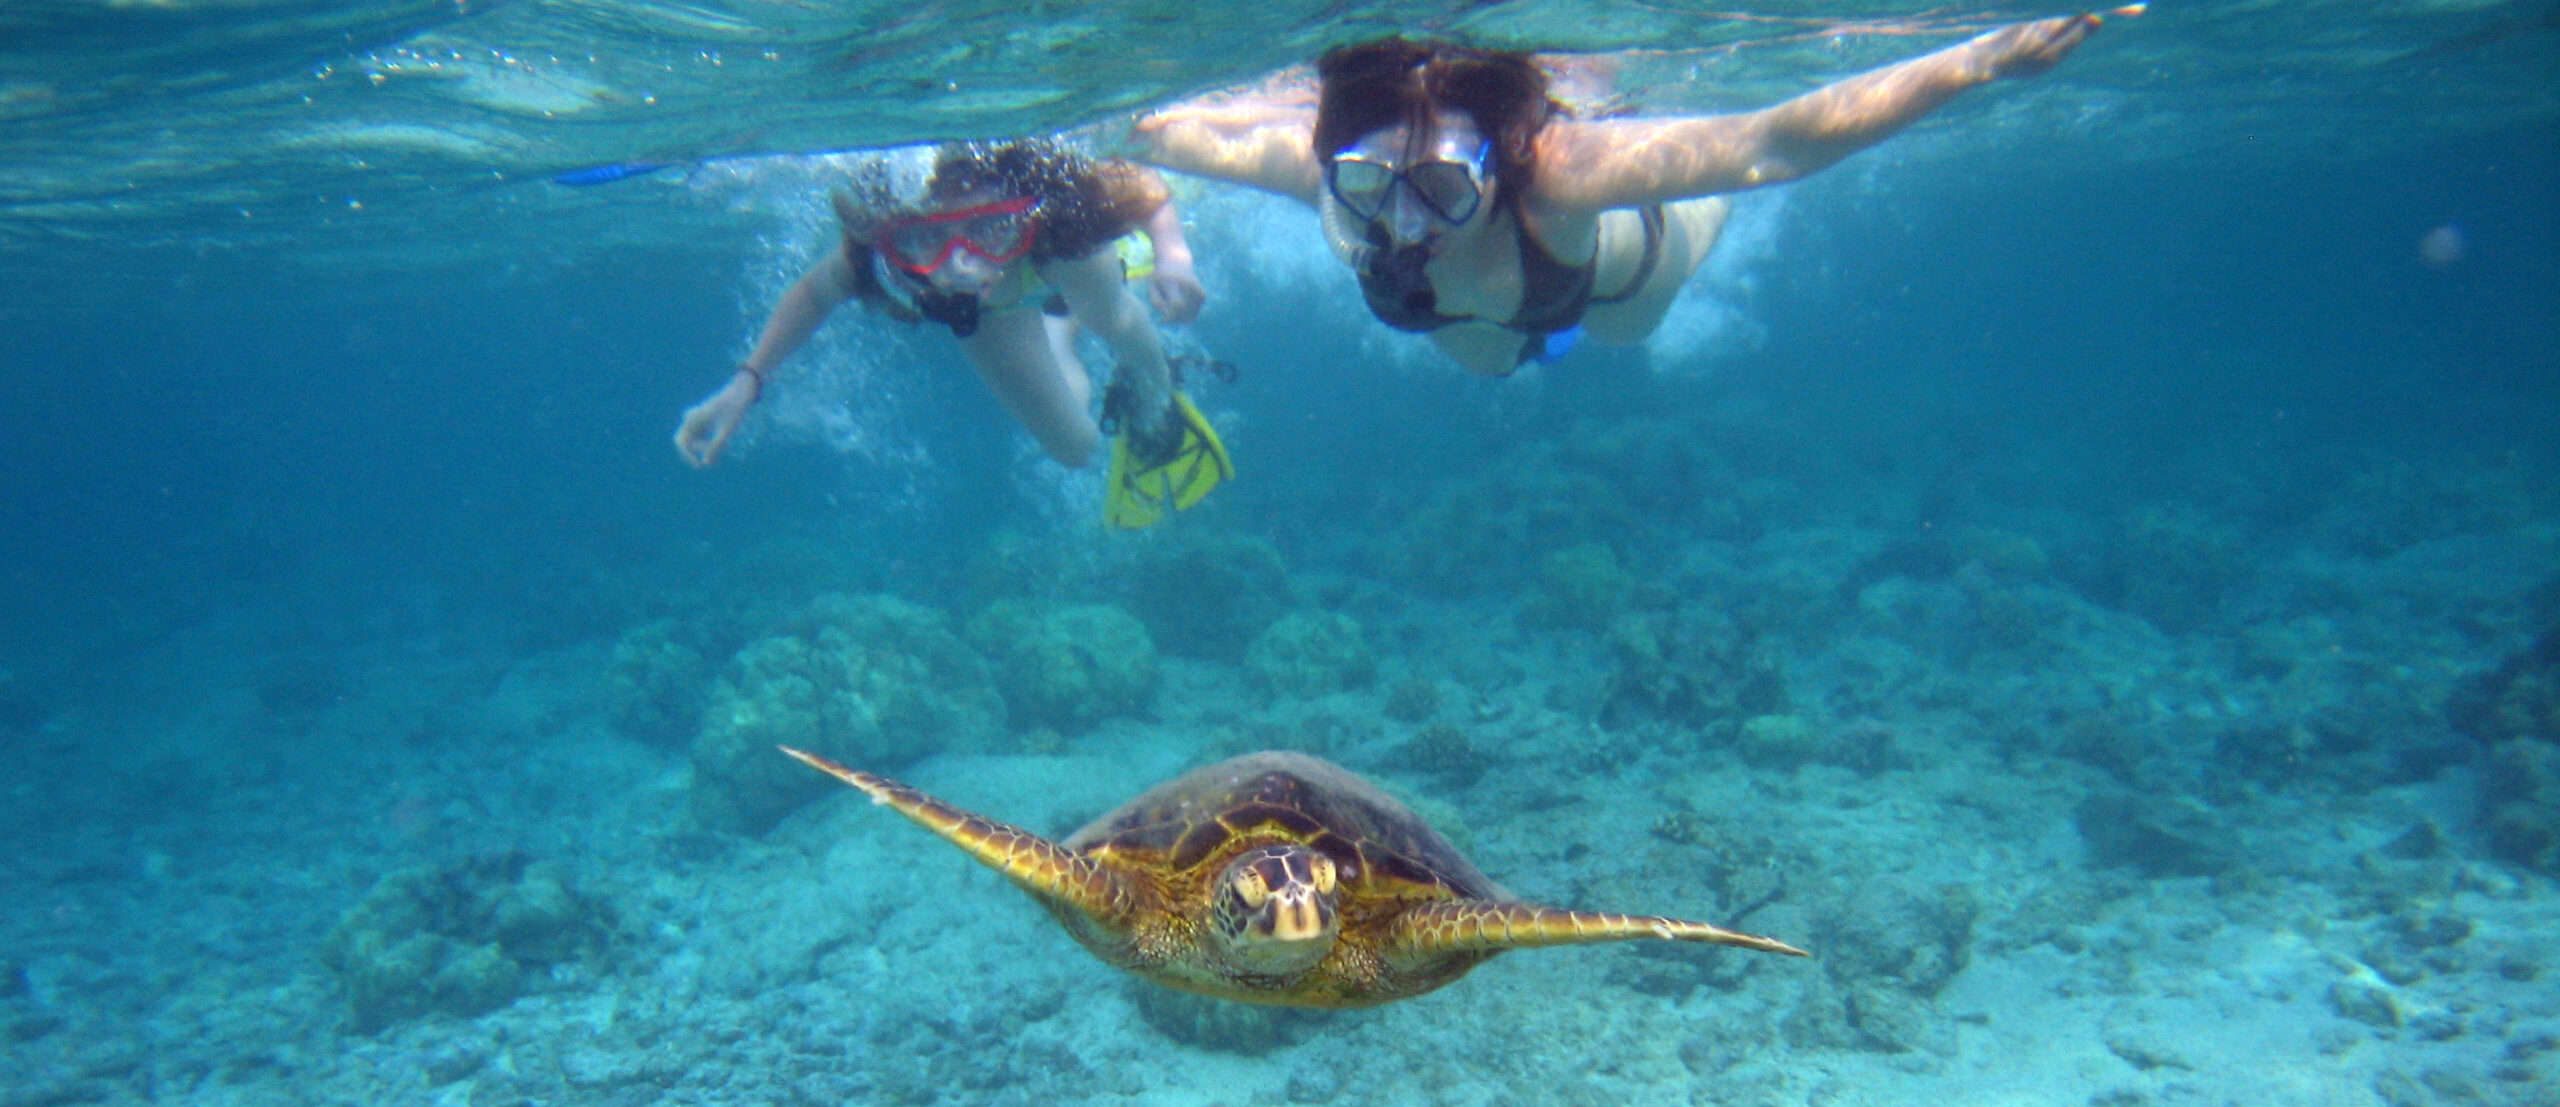 Turtle Bay Snorkel and scuba dive oahu